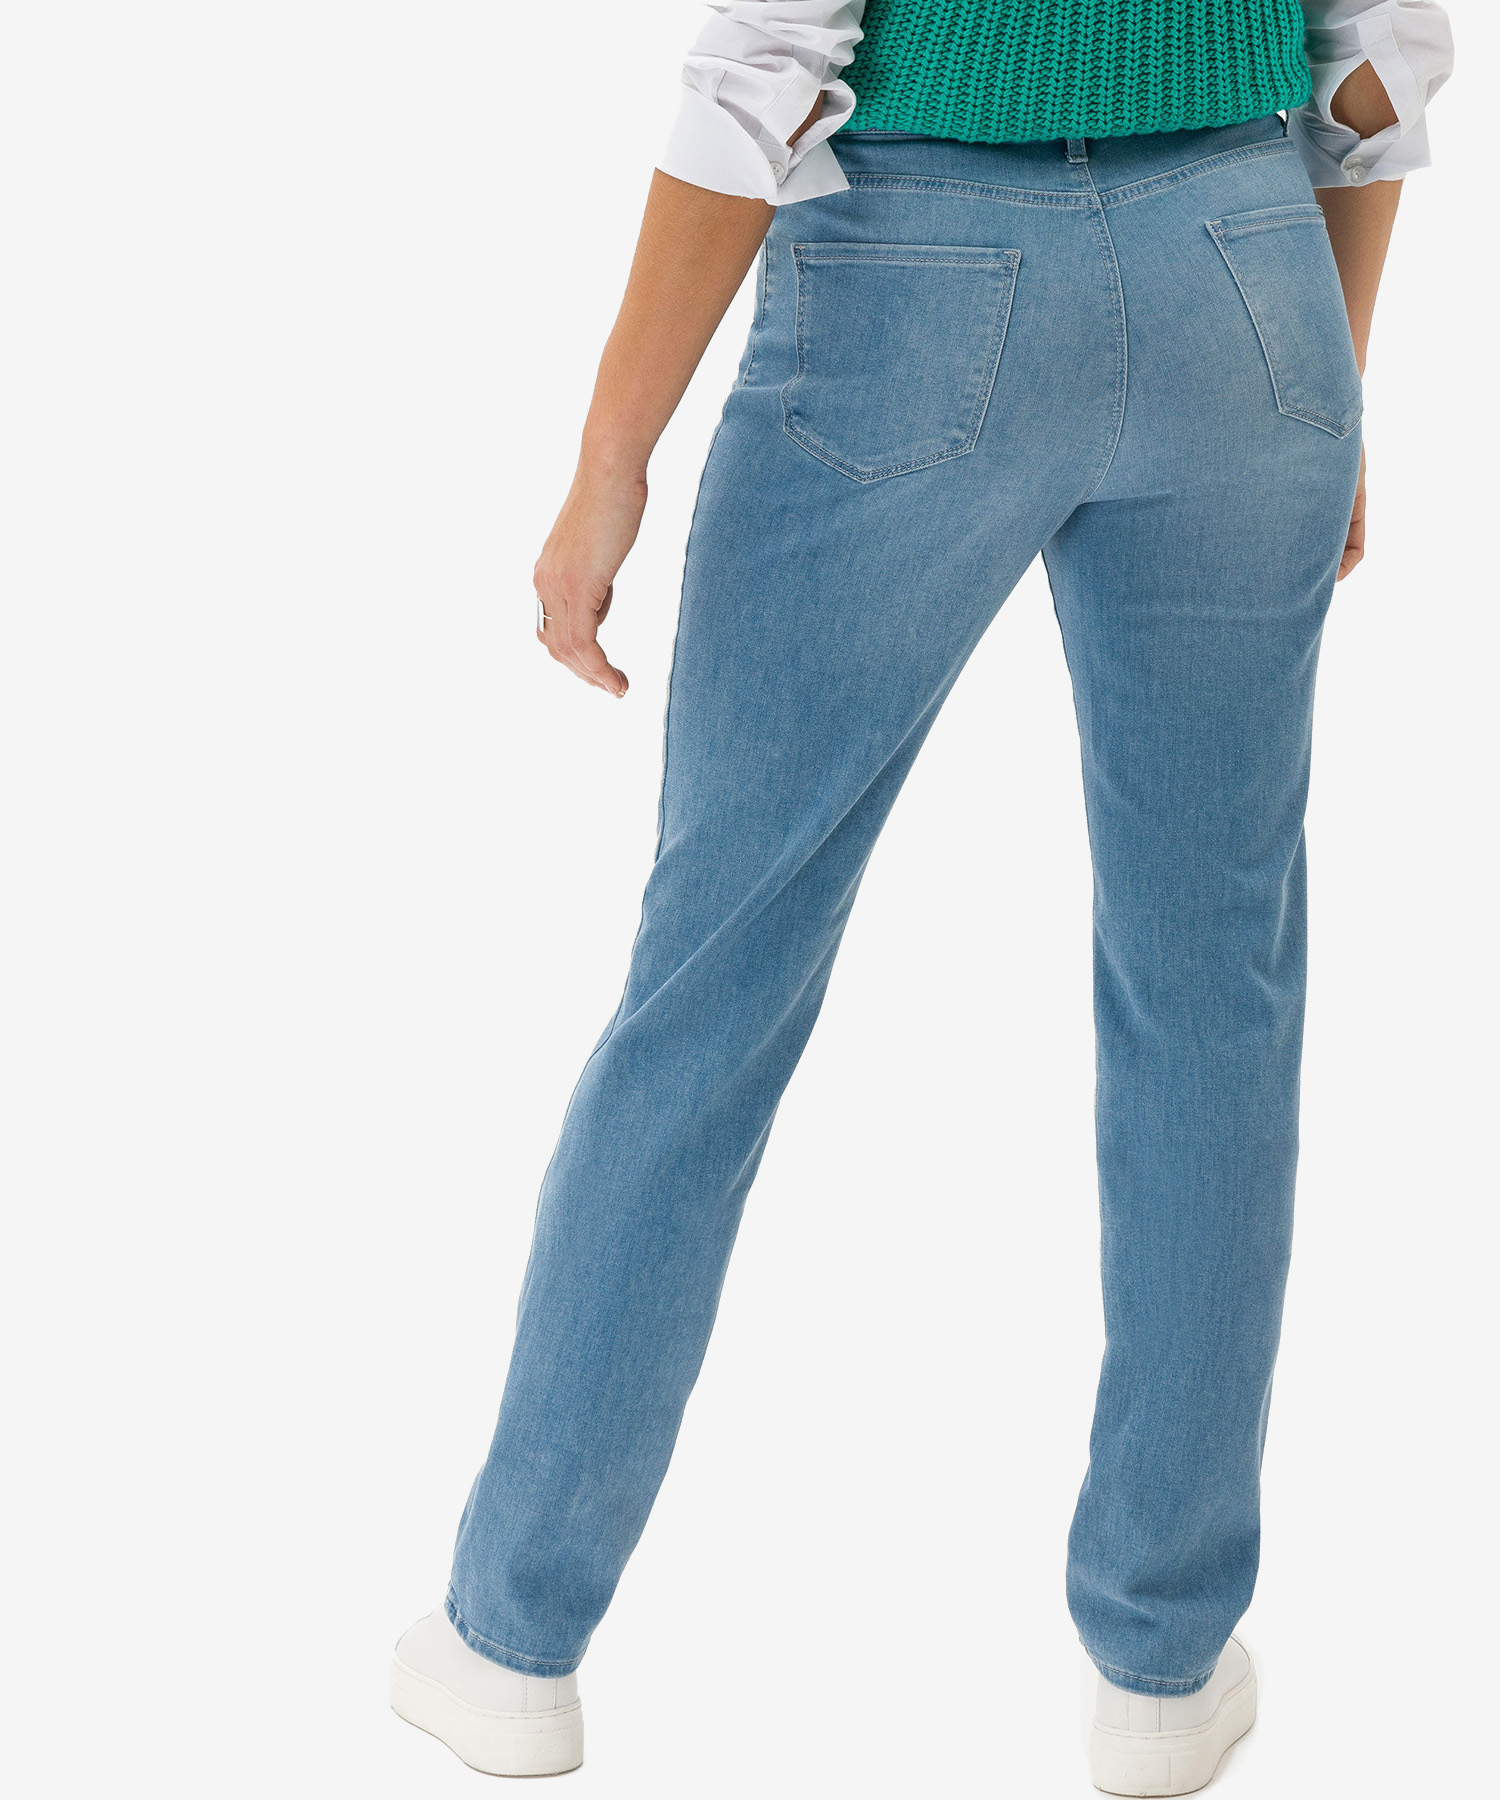 Brax slim fit jeans Swarovski elements Carola